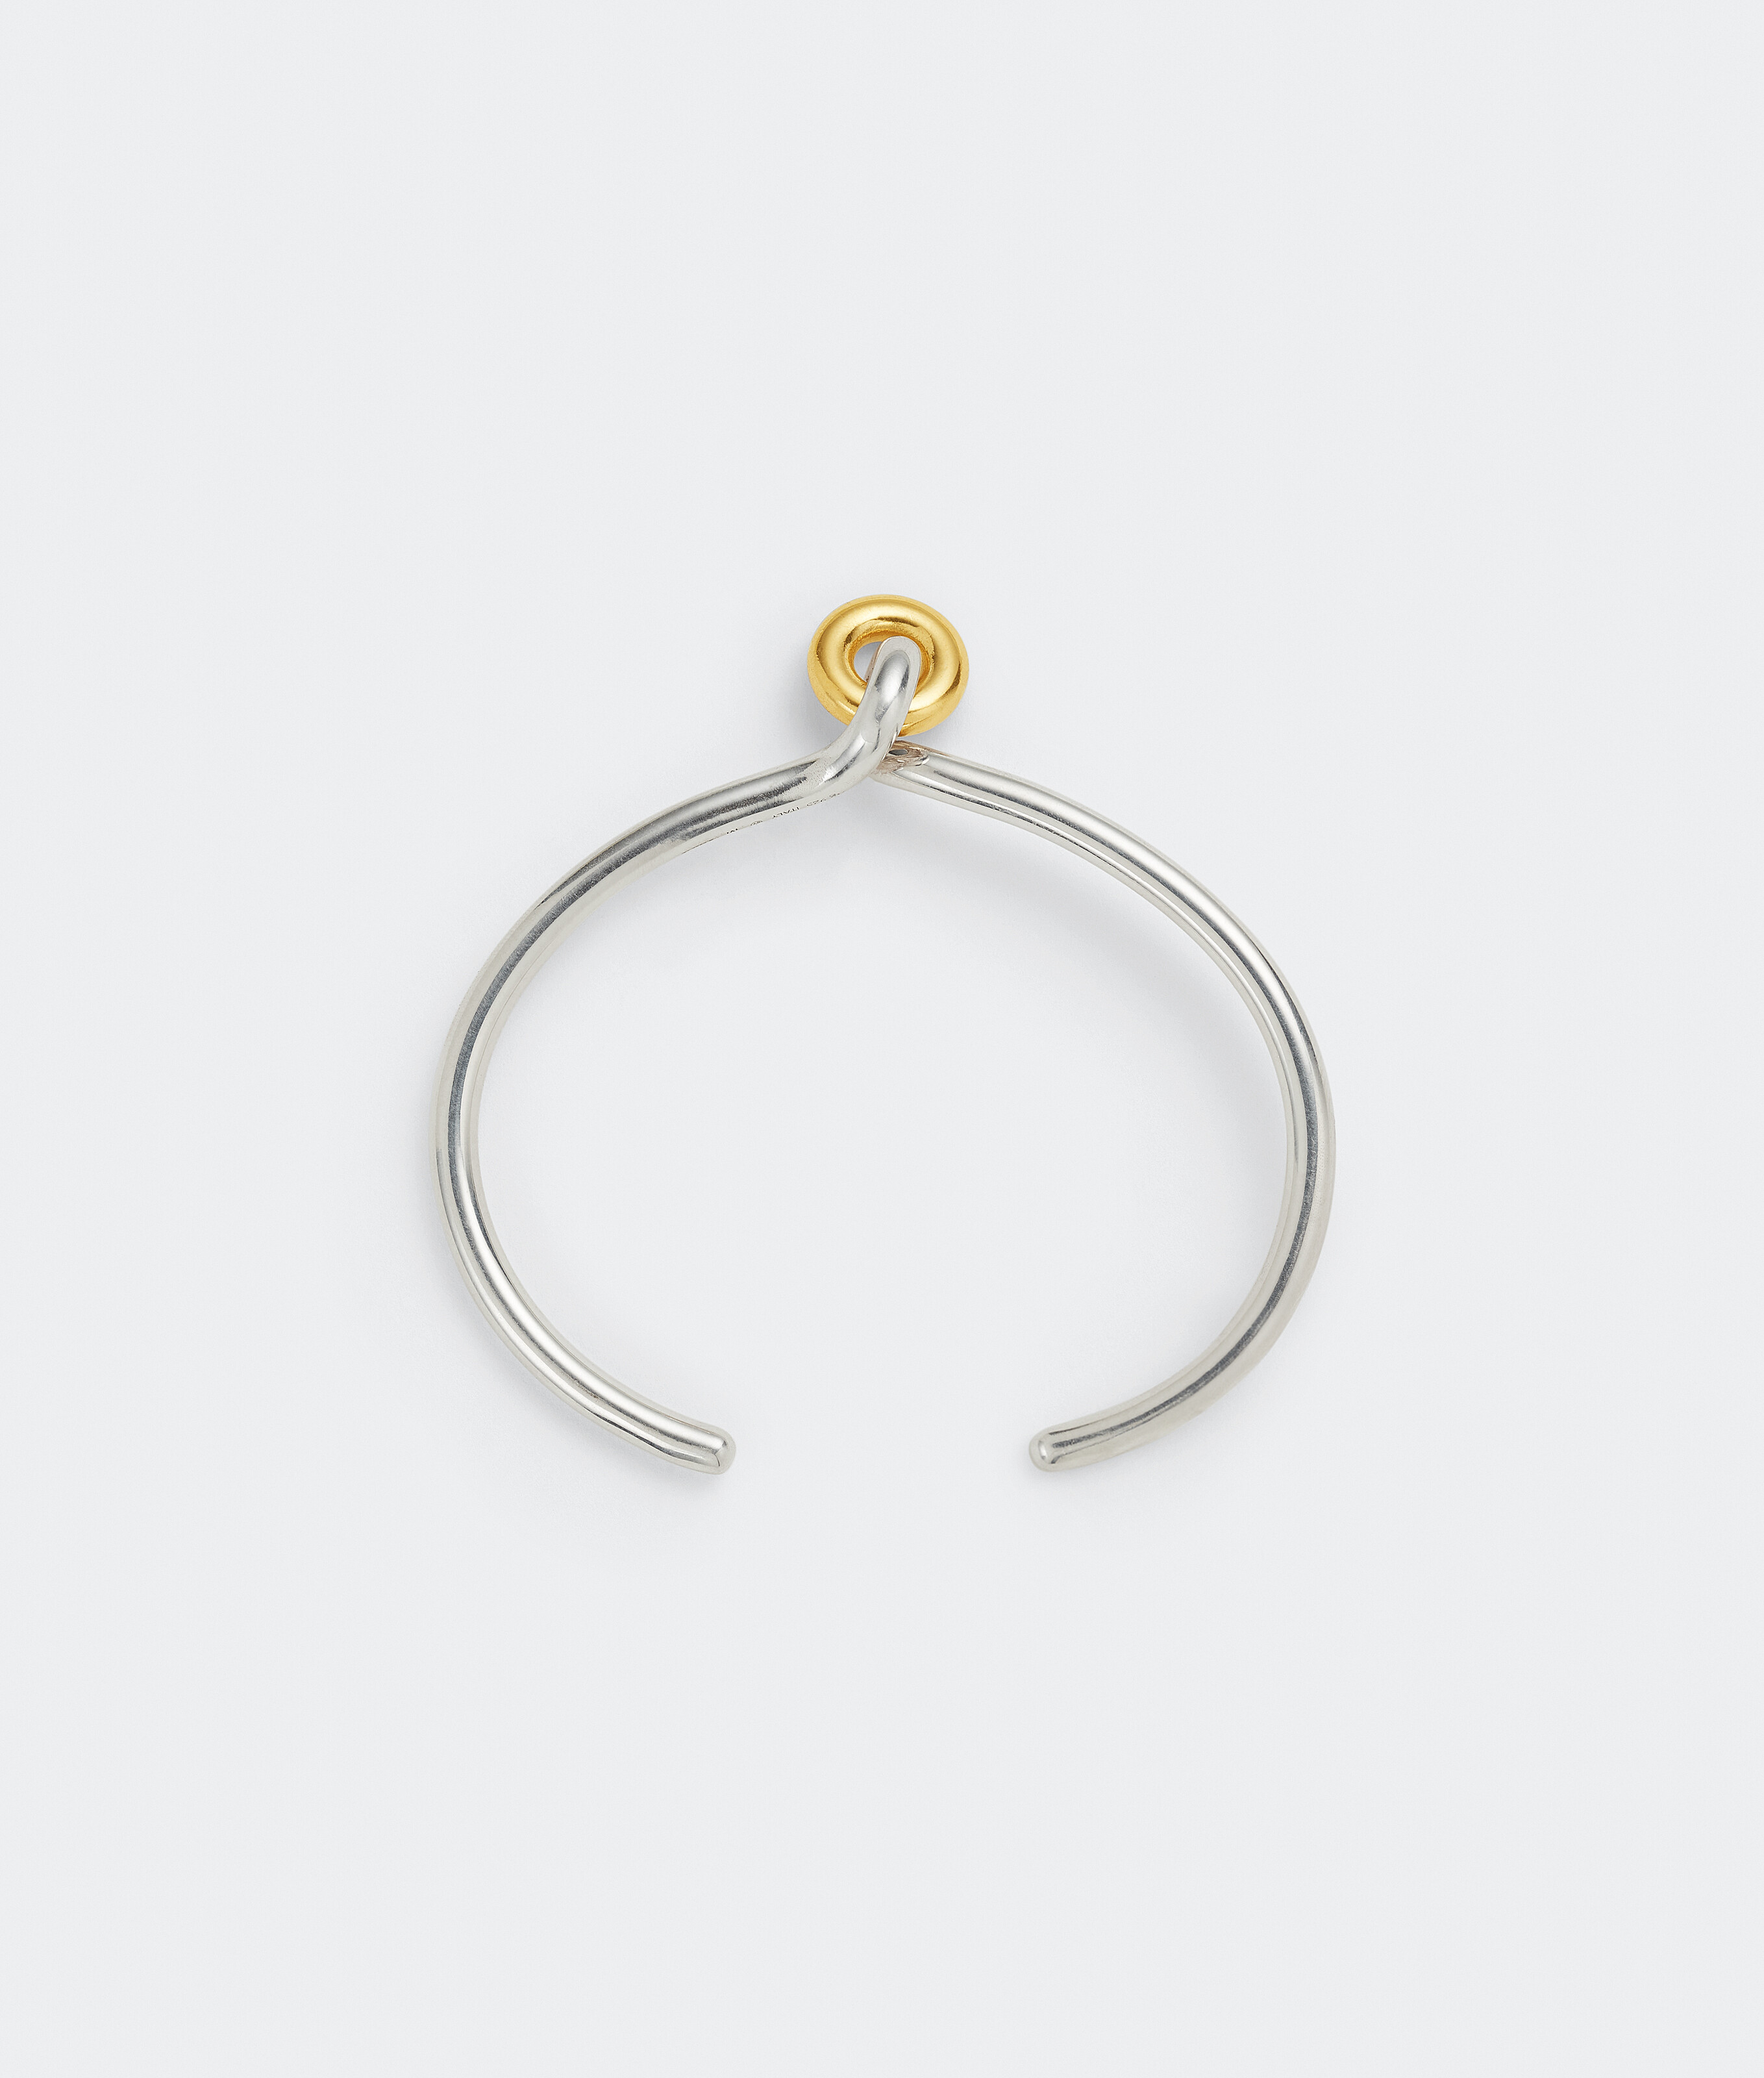 Bottega Veneta® Women's Loop Bracelet in Silver / Yellow Gold